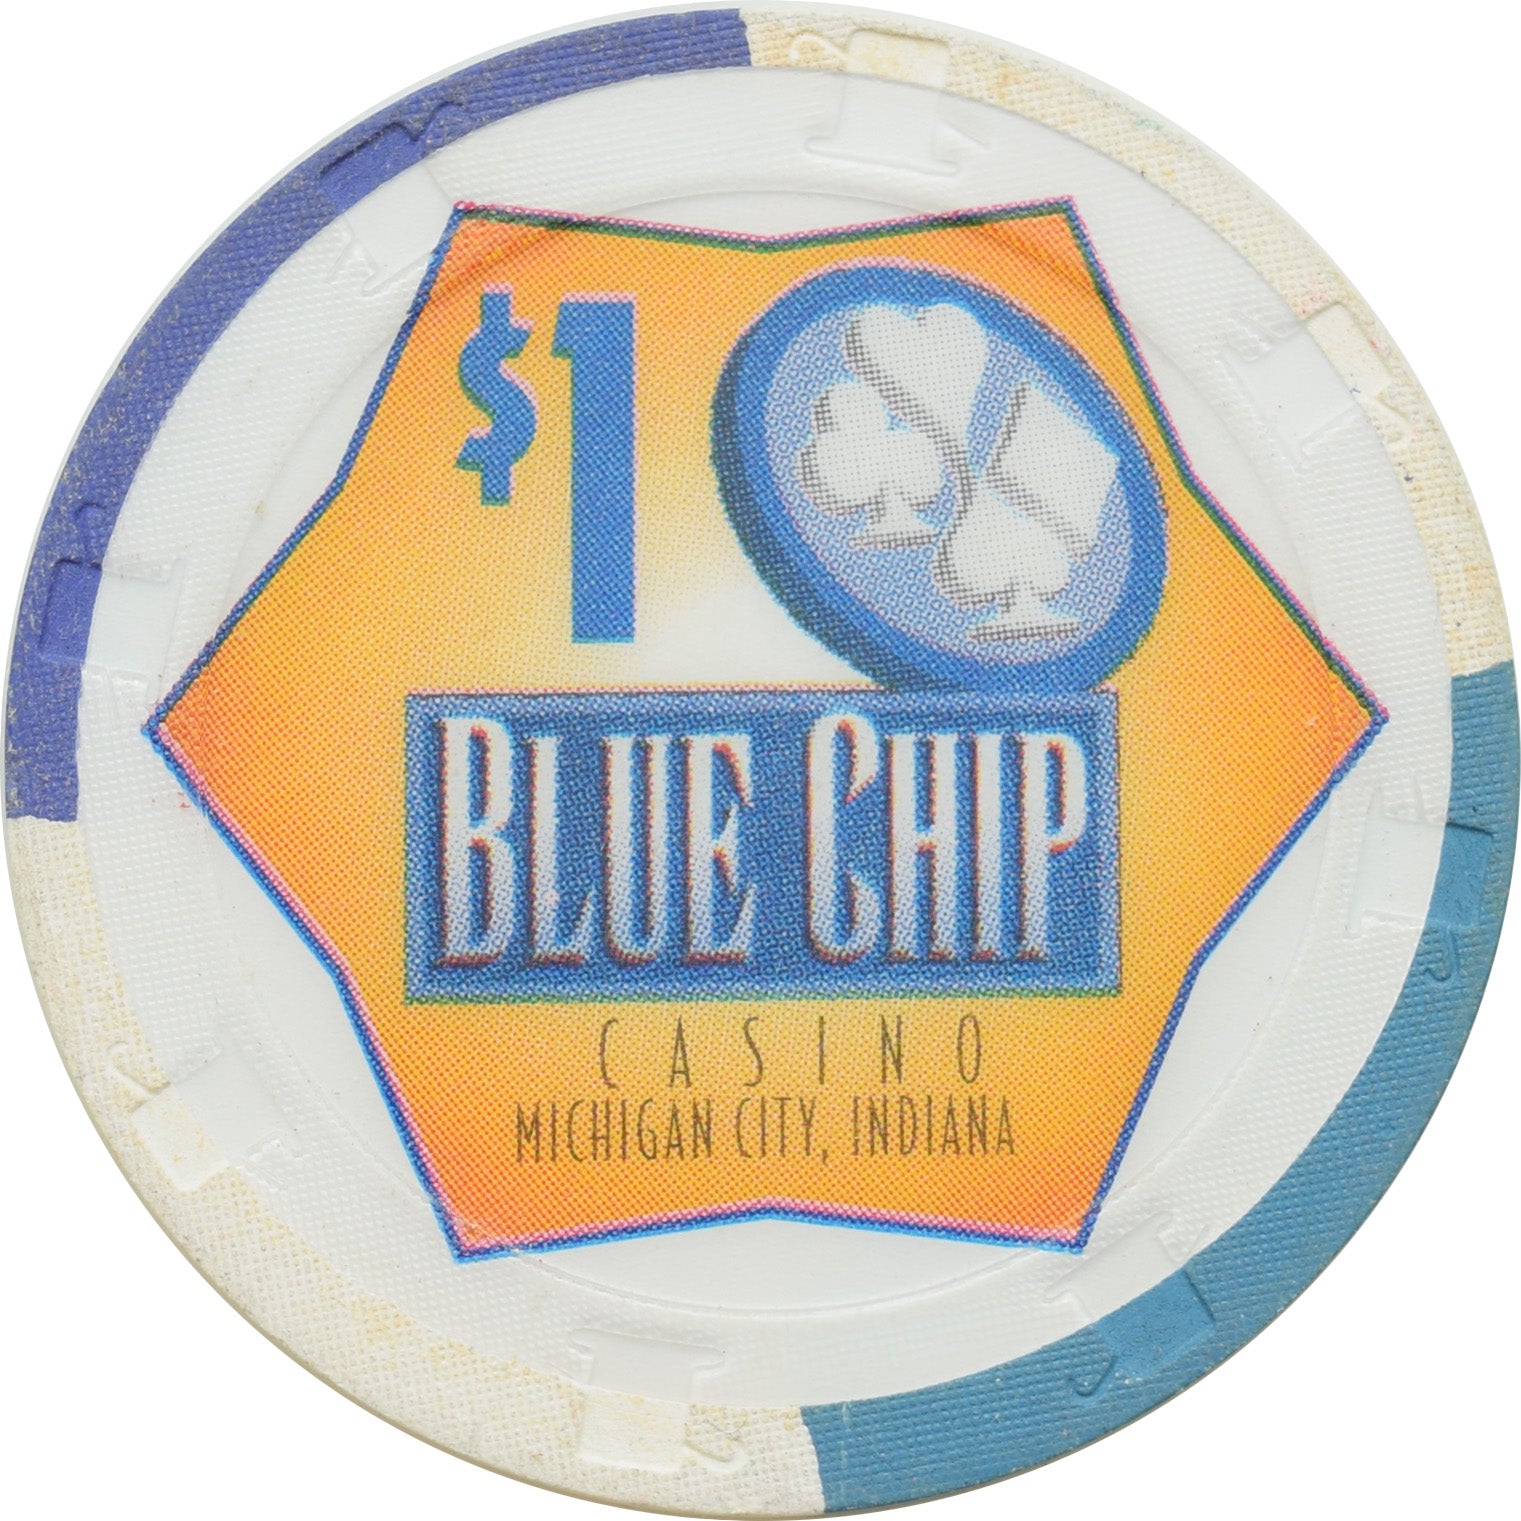 blue chip casino sportsbook